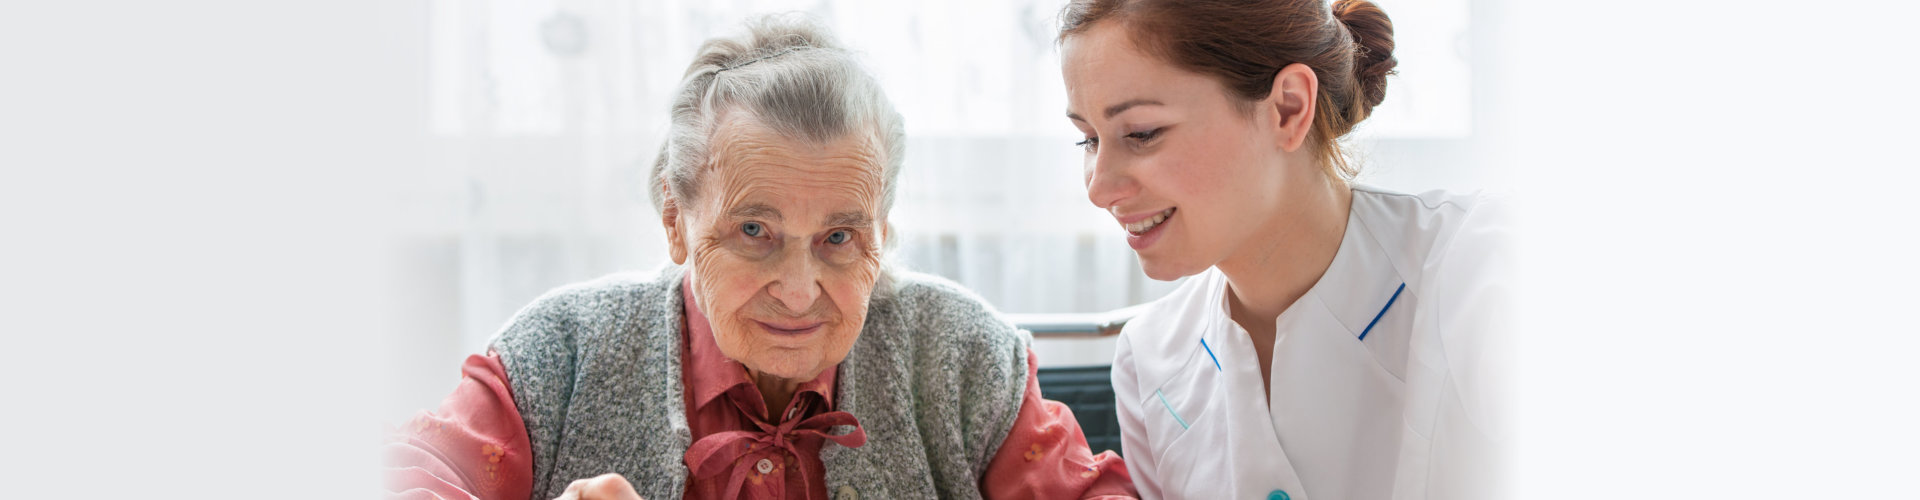 nurse looking after elderly woman